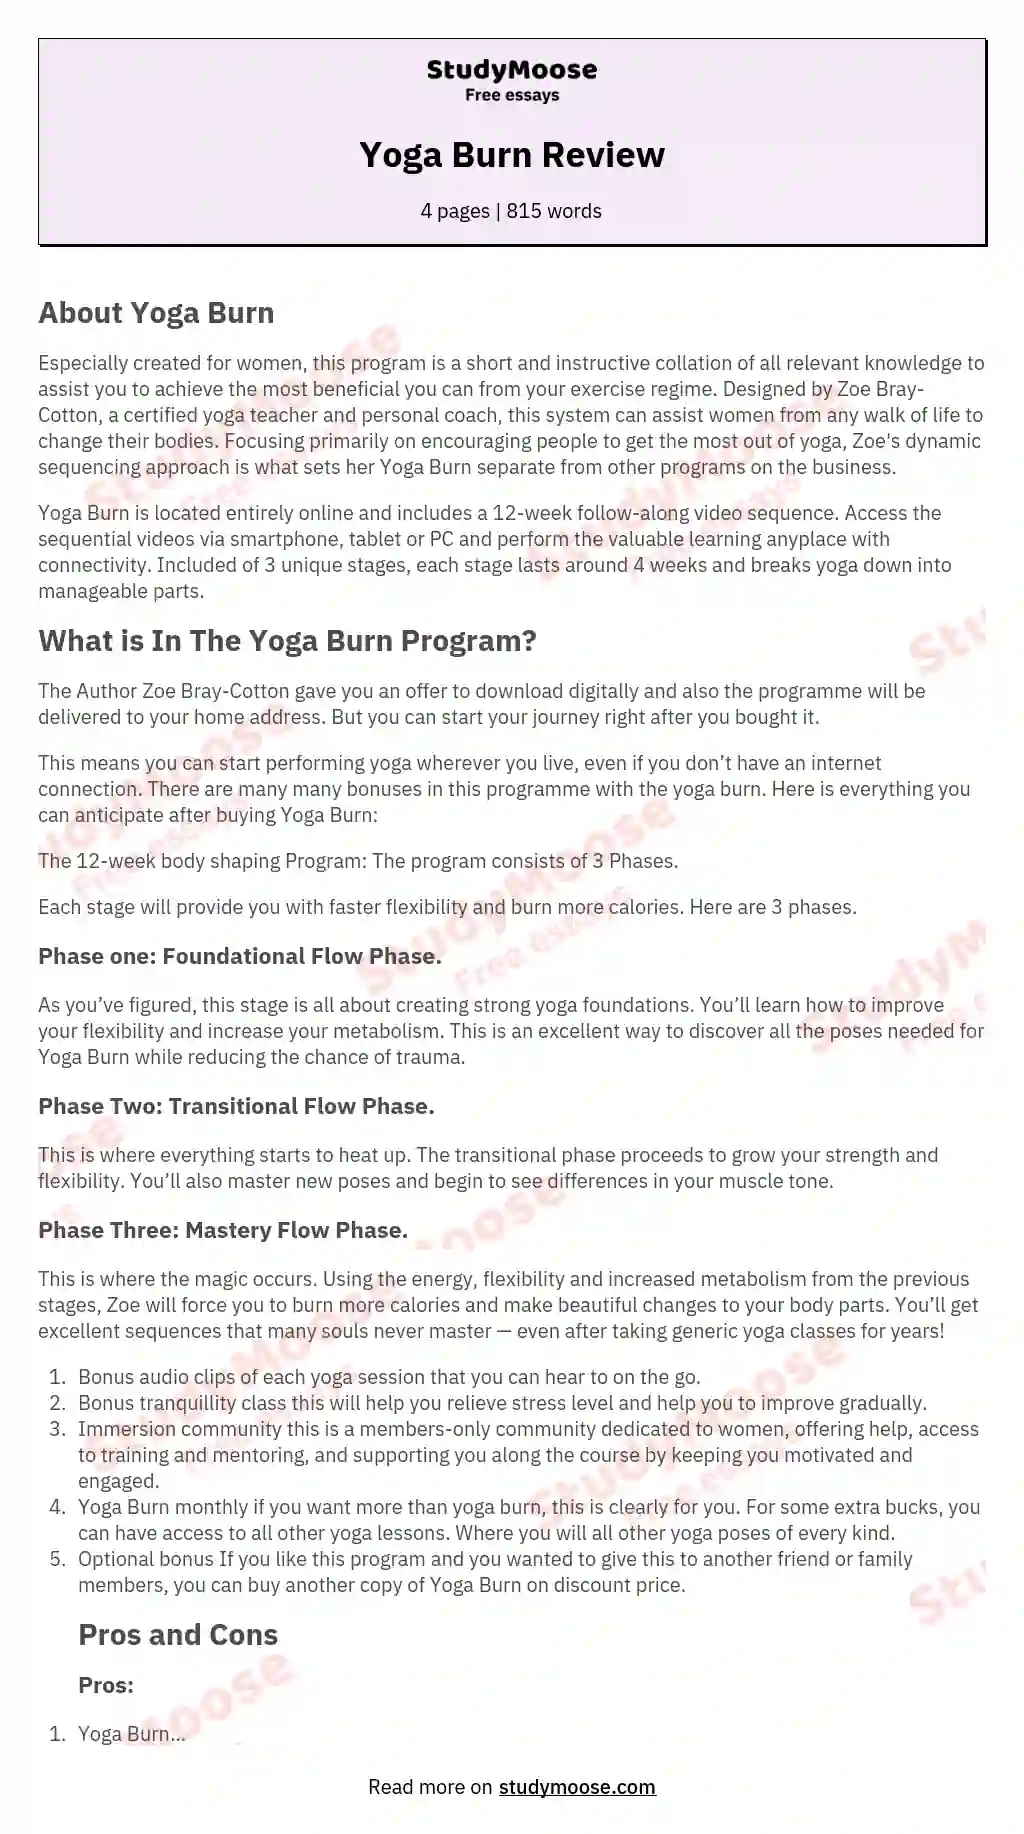 Yoga Burn Review essay